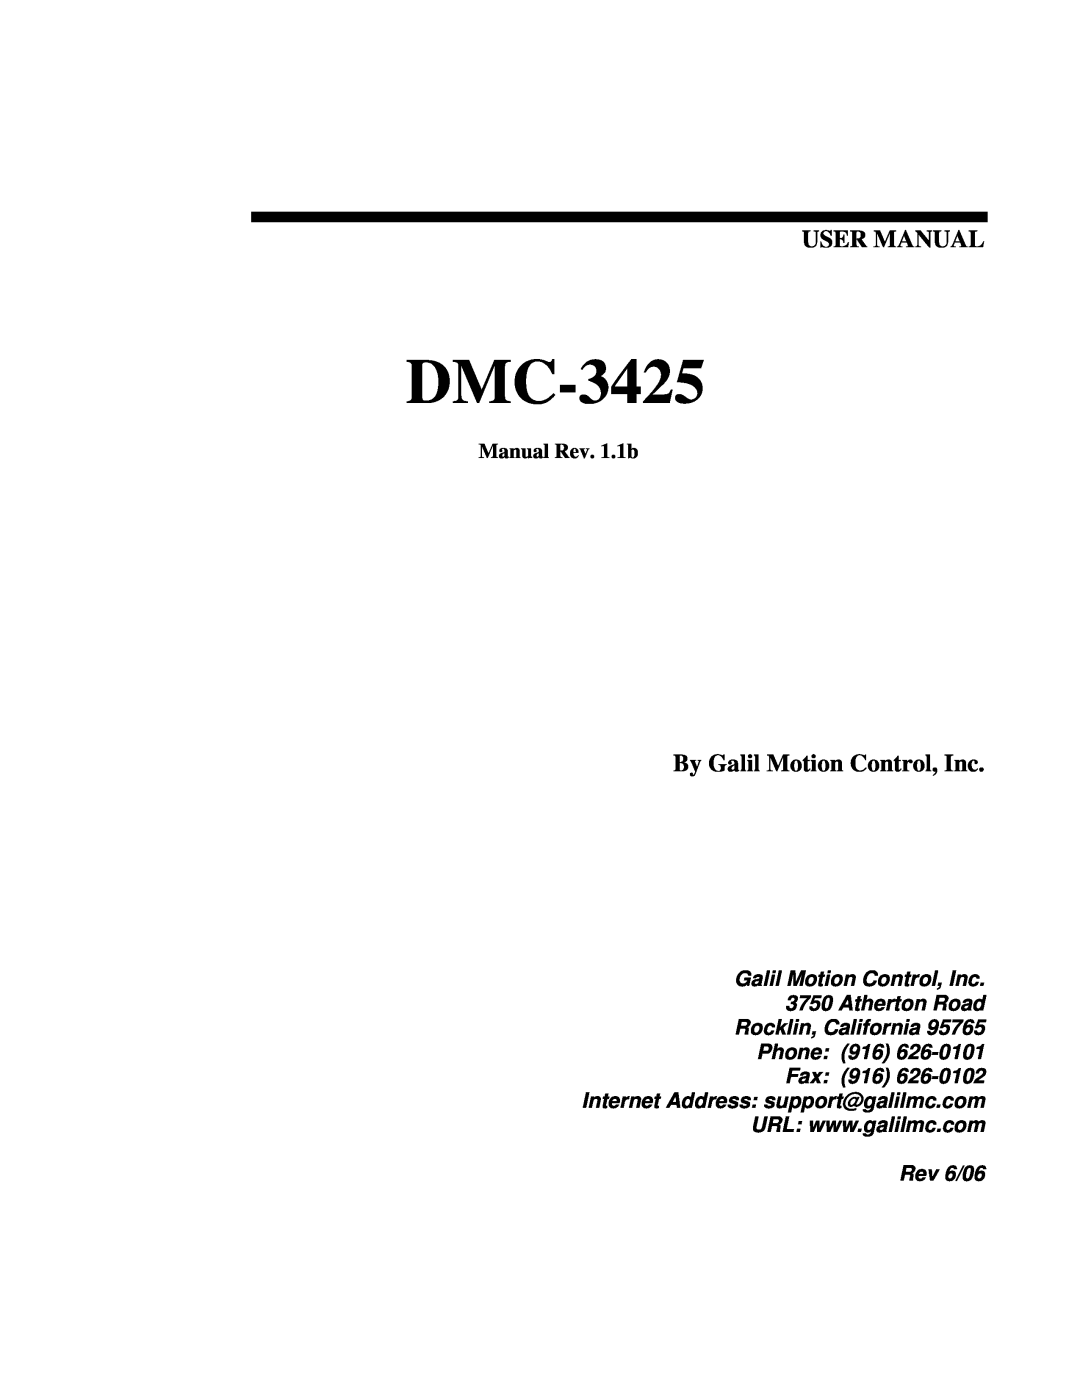 Galil DMC-3425 user manual User Manual, By Galil Motion Control, Inc, Manual Rev. 1.1b 